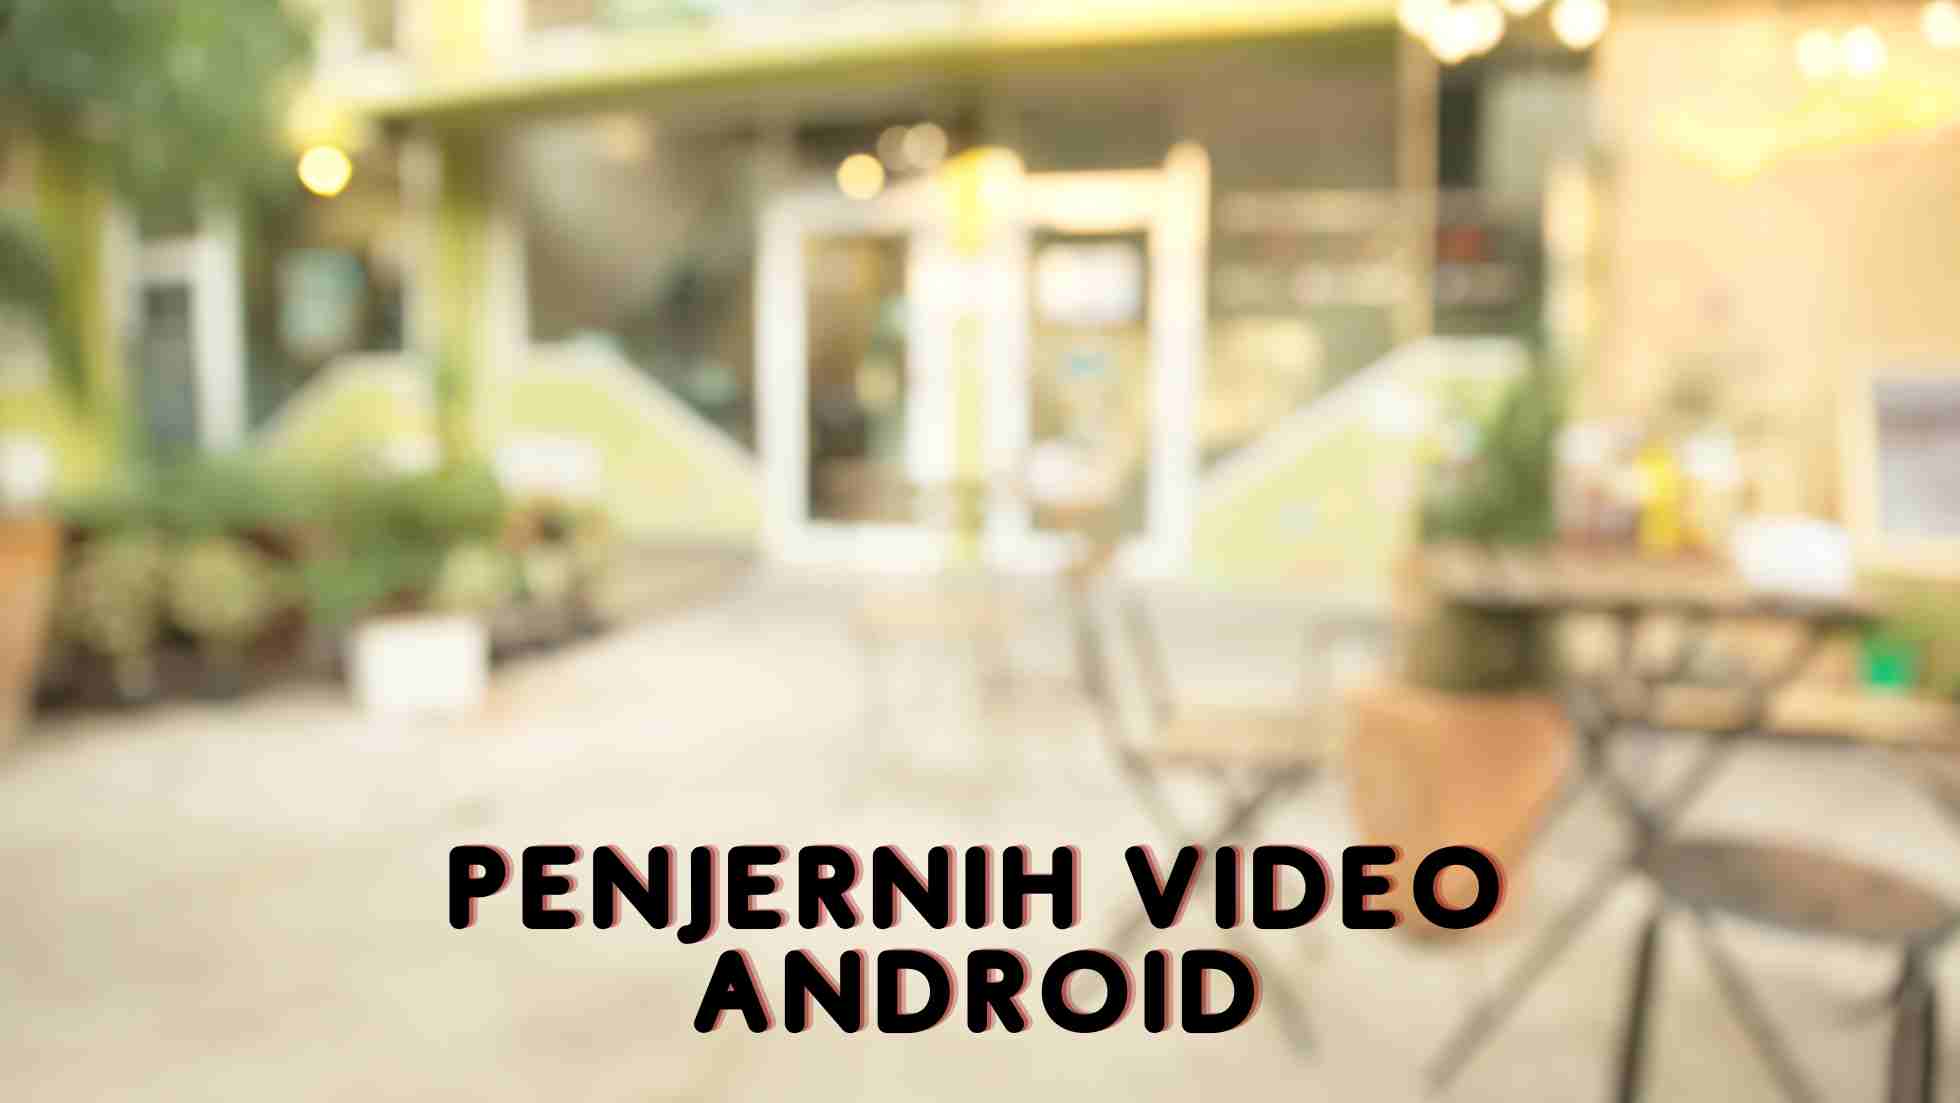 penjernih video android